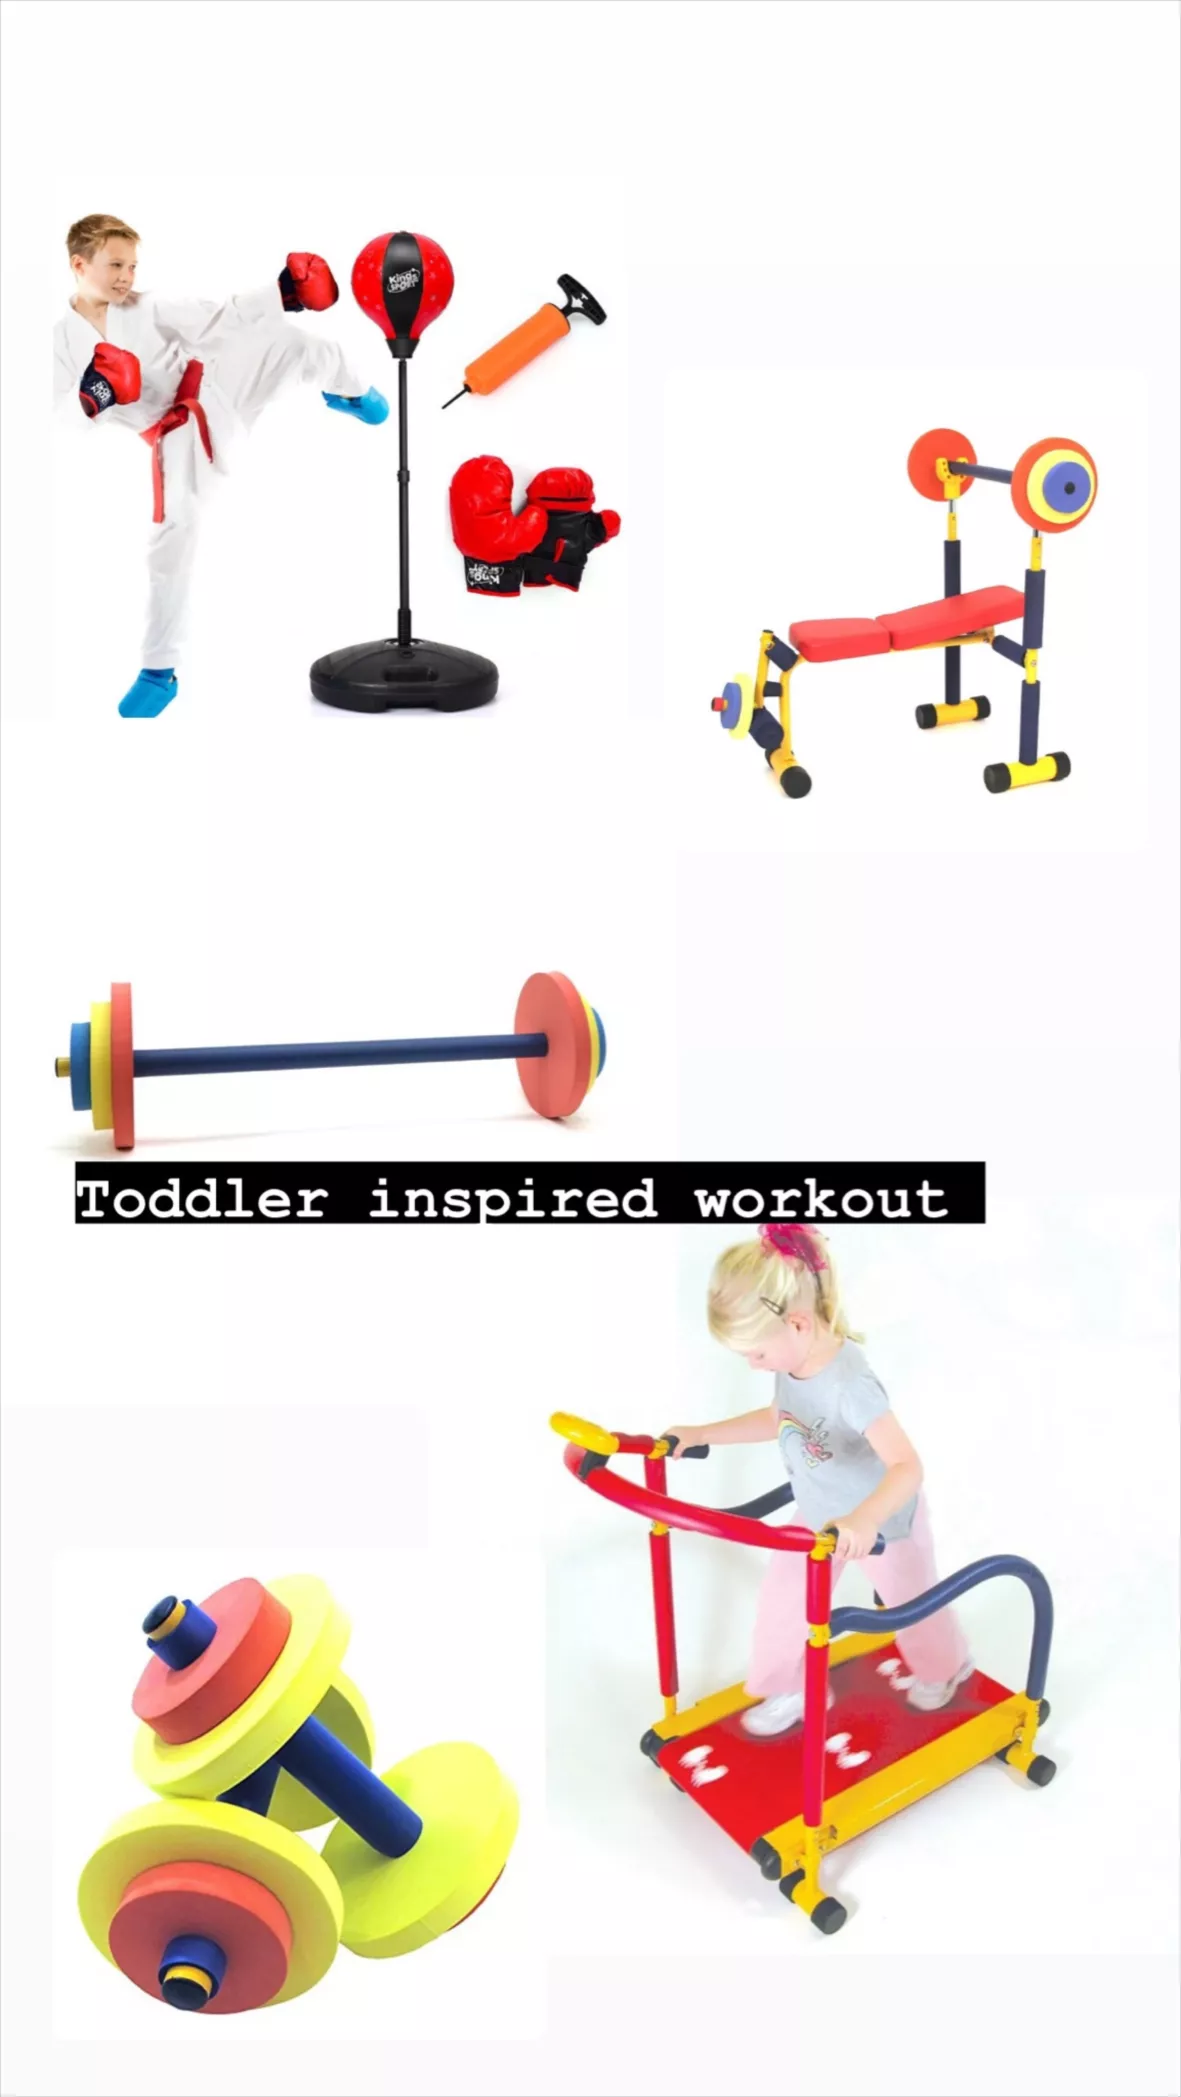 Fun & Fitness For Kids Children's Exercise Equipment Weight Lift Bench Set